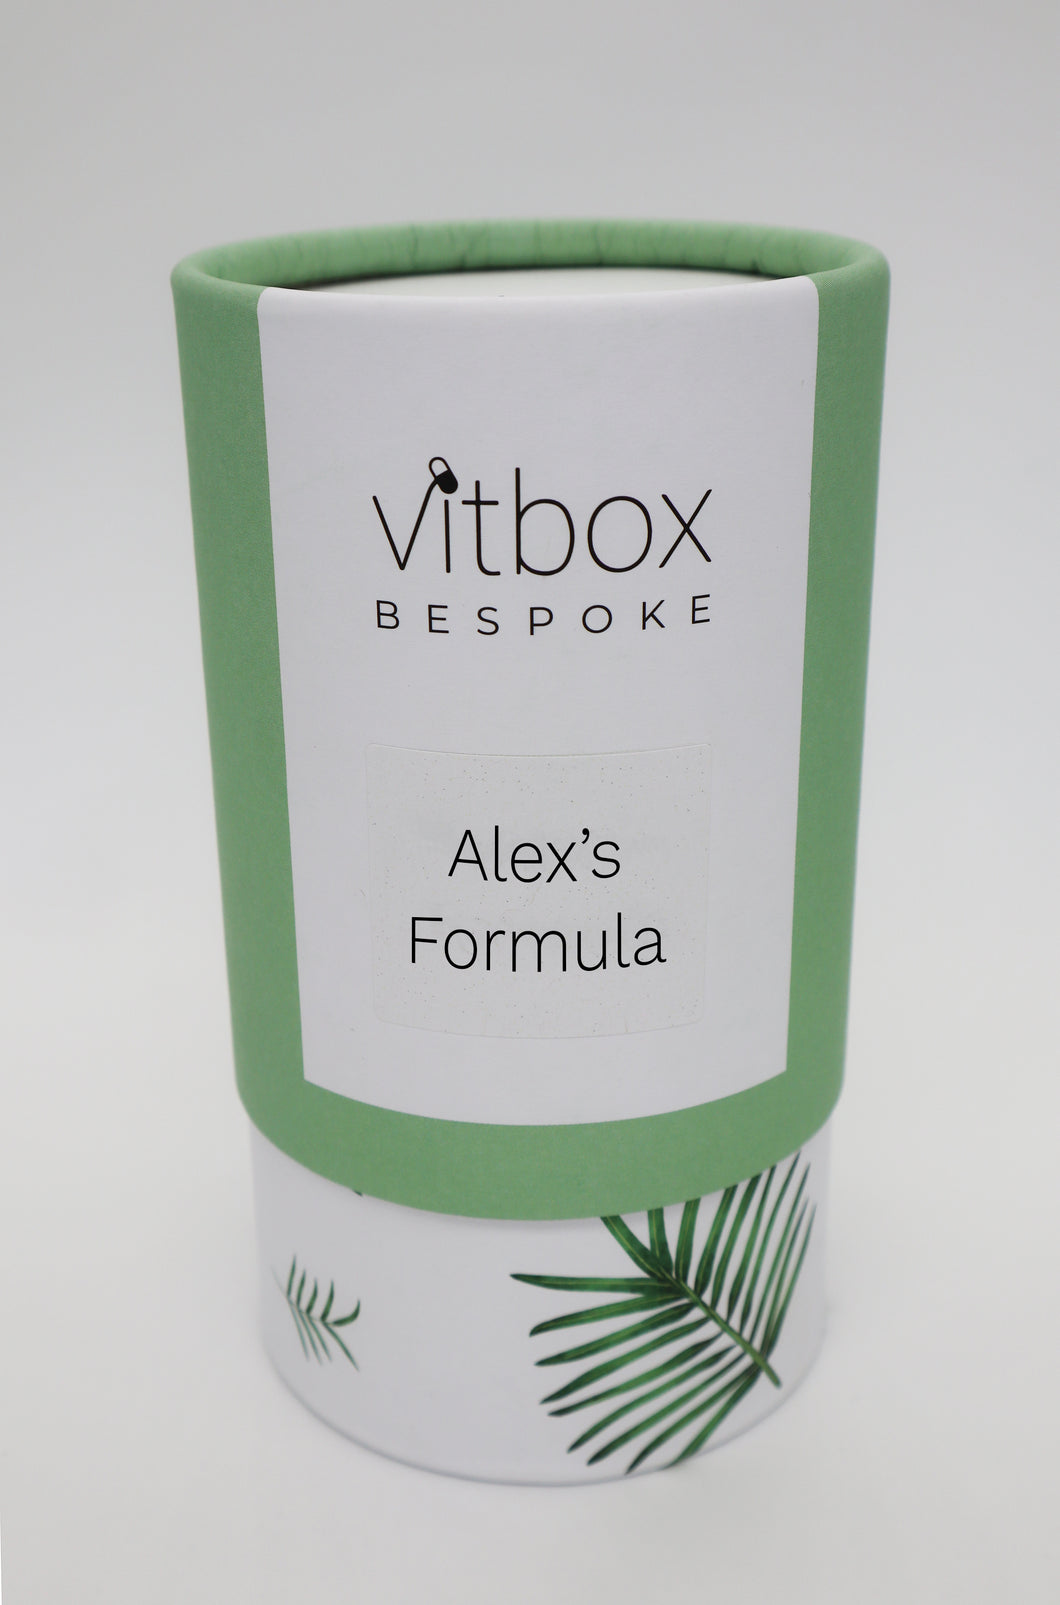 Alex's Vitbox Bespoke